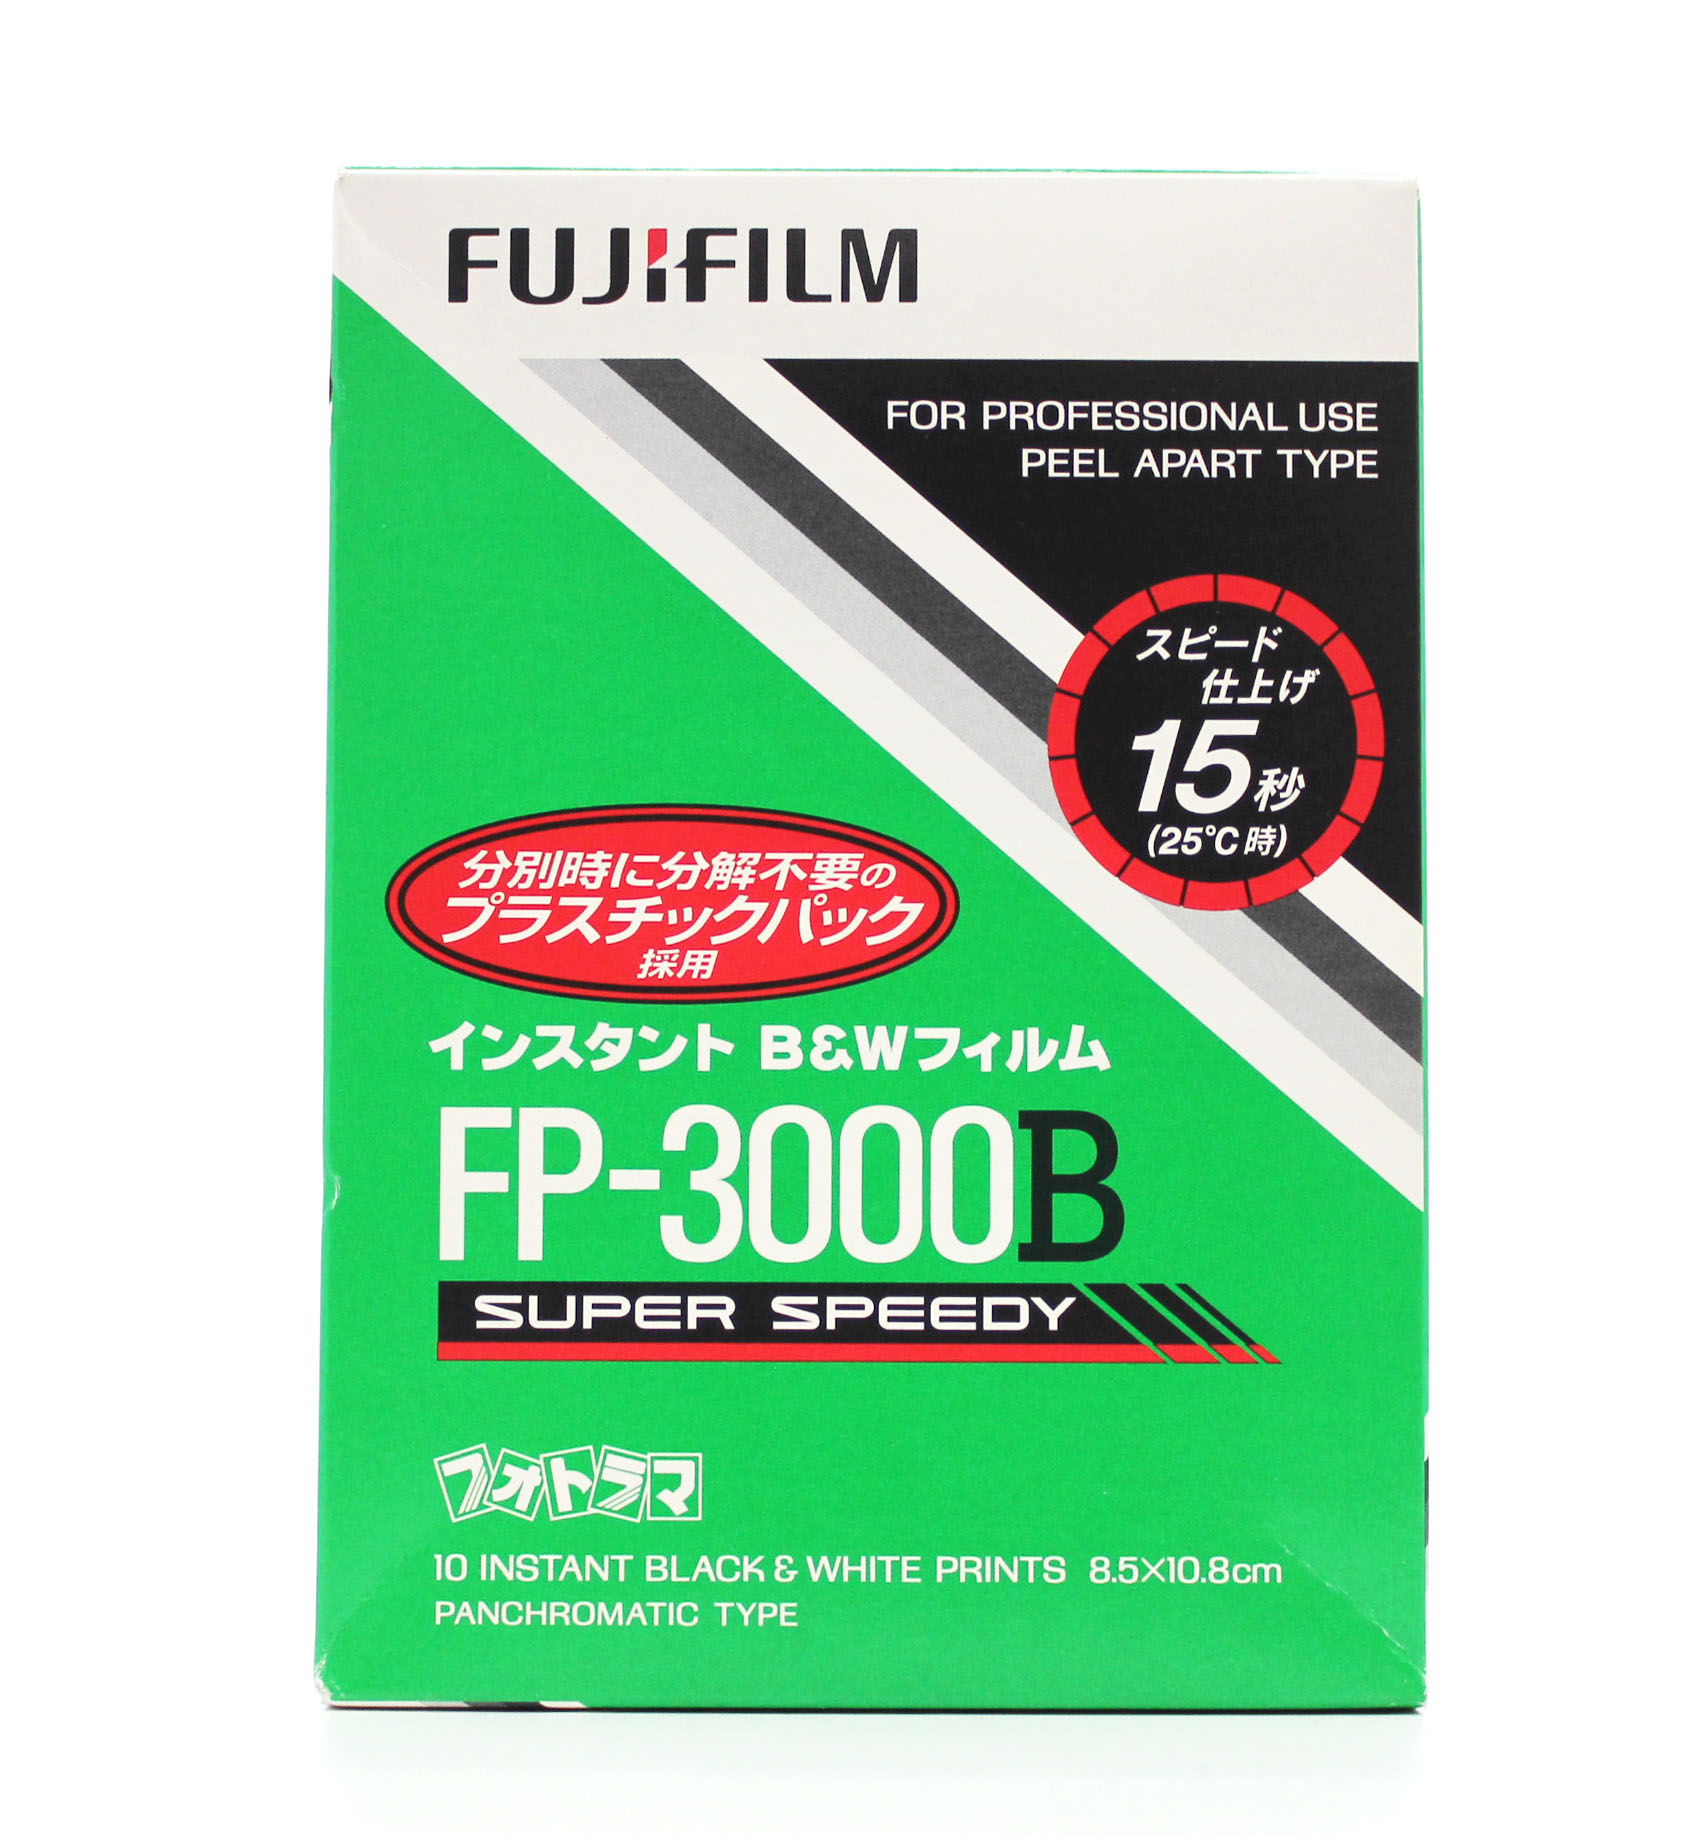  Fuji Fujifilm FP-3000B 8.5x10.8cm Instant Black & White Film (Expired 09/2013) from Japan Photo 1